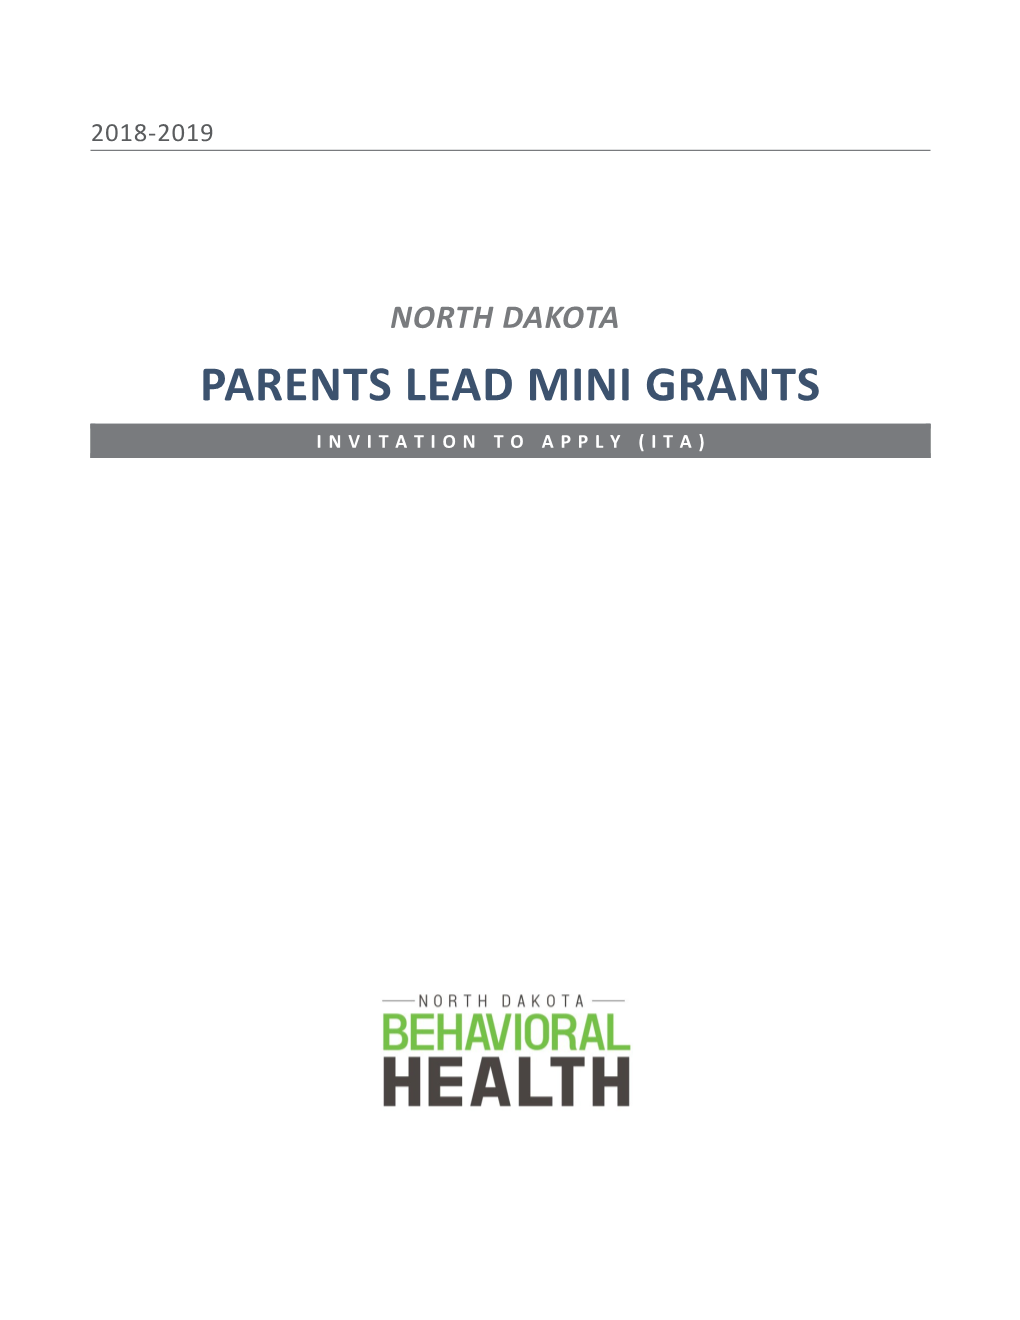 Parents Lead Mini Grants